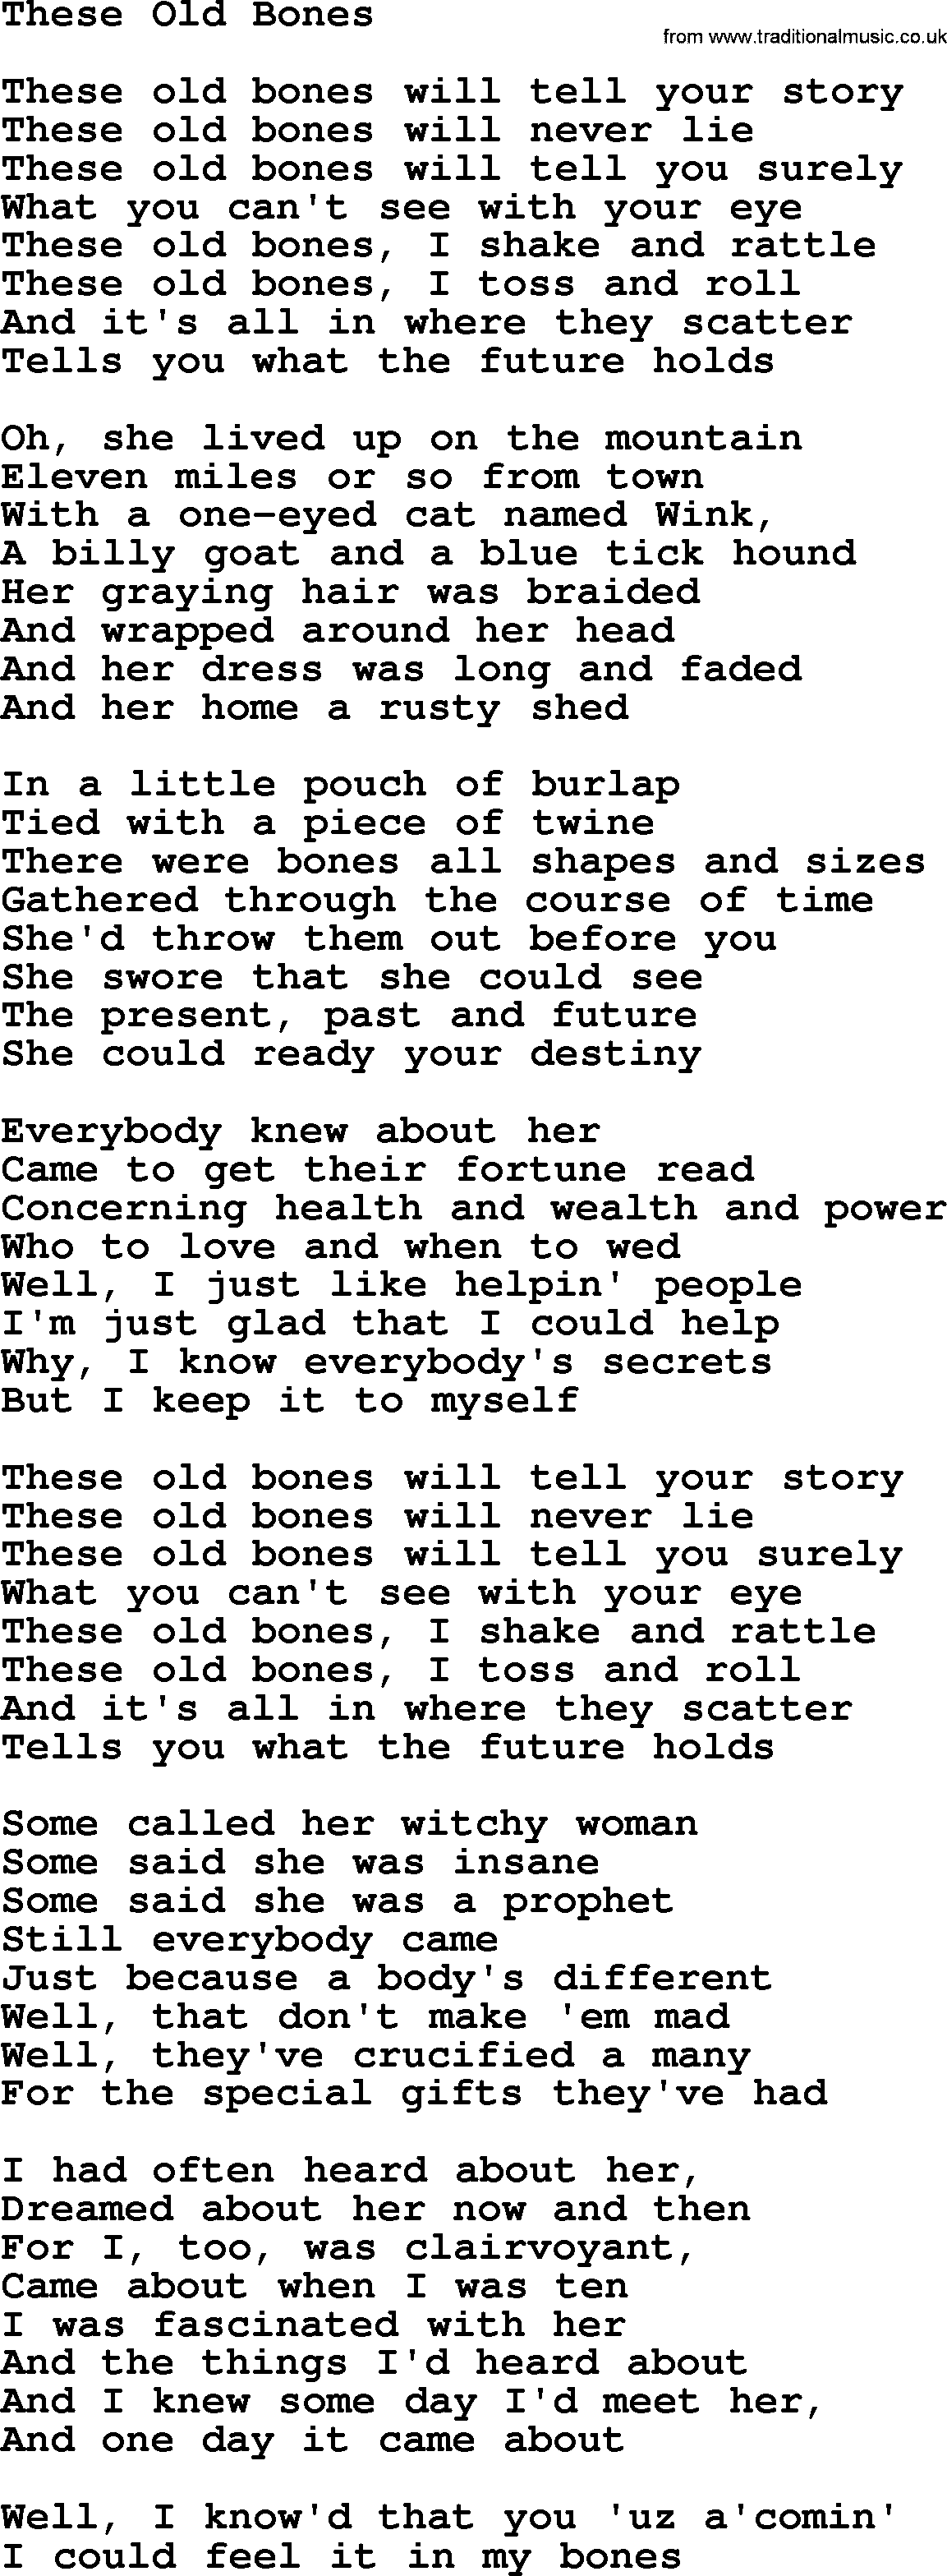 Dolly Parton song These Old Bones.txt lyrics